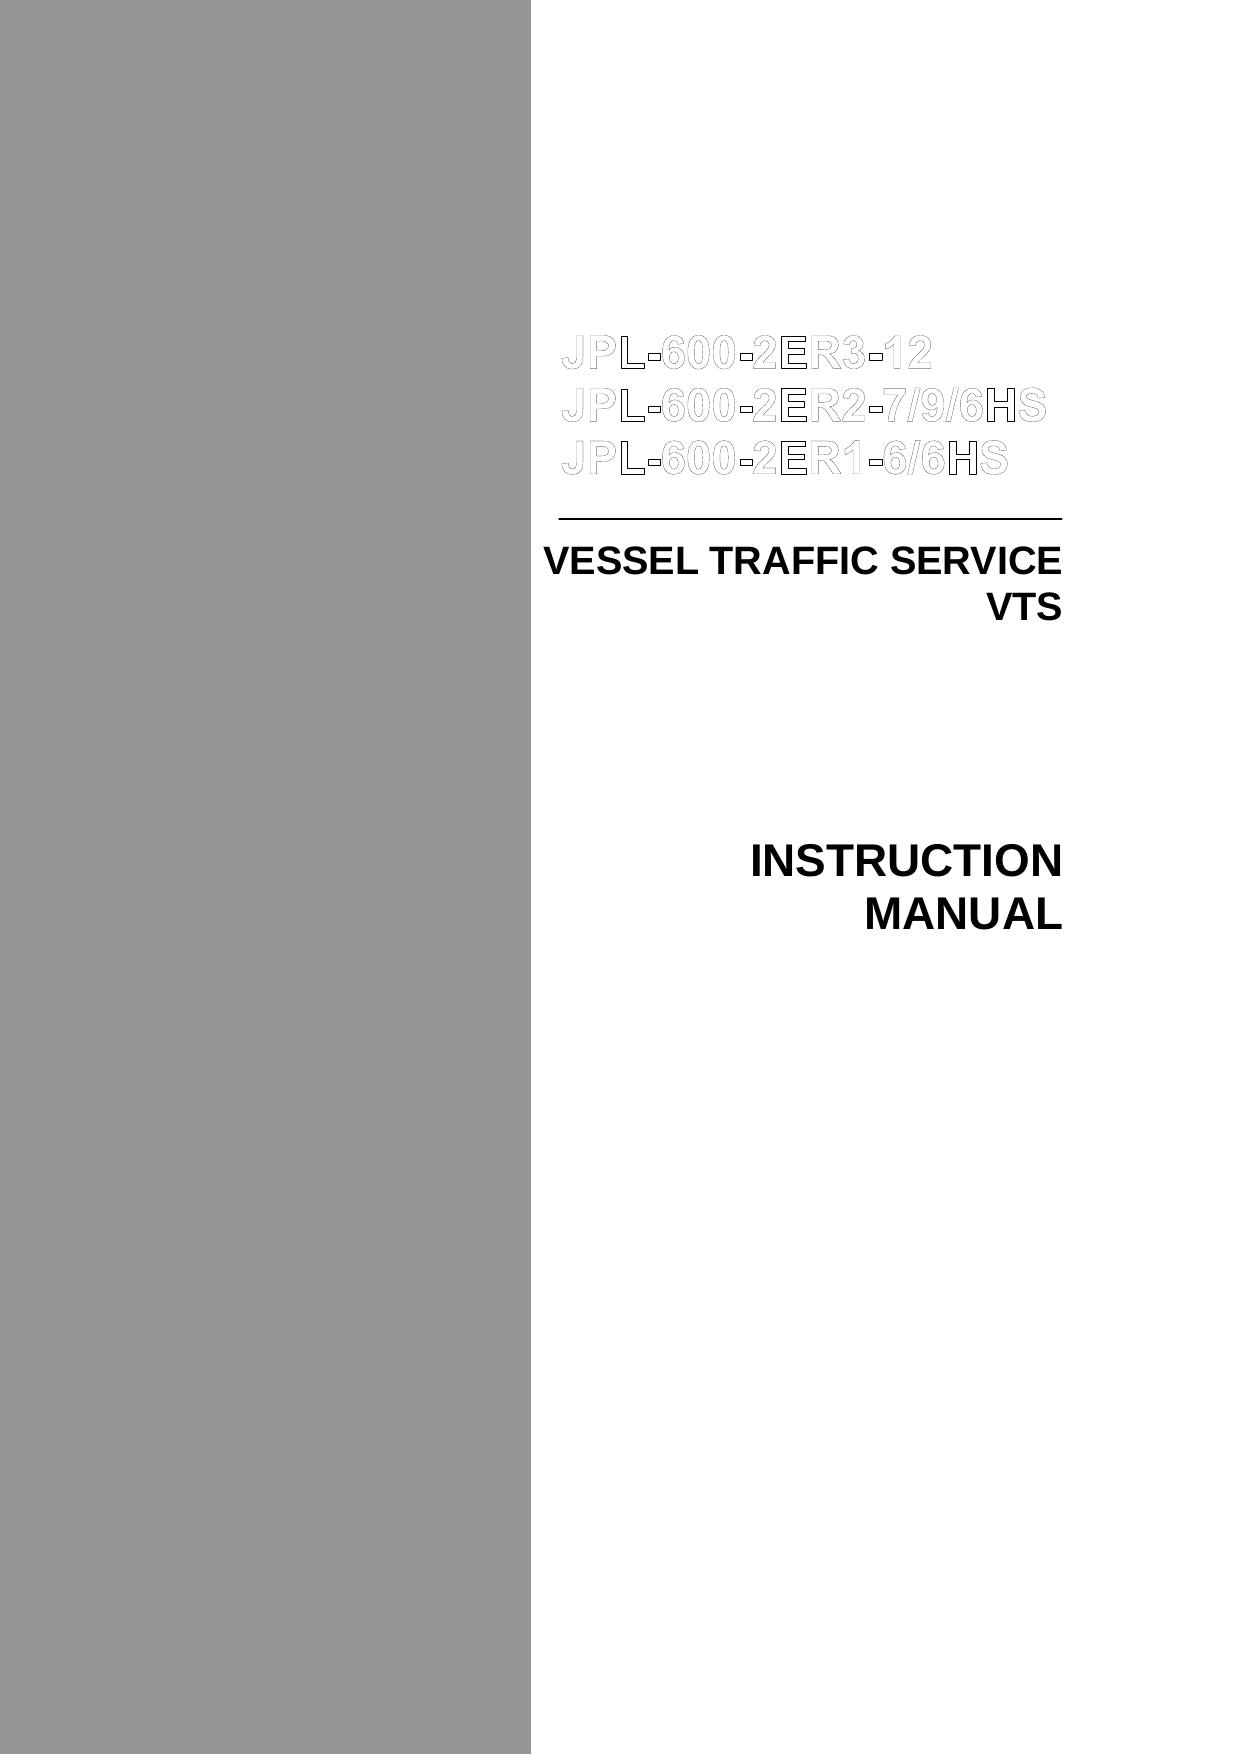  VESSEL TRAFFIC SERVICE VTS     INSTRUCTION  MANUAL 